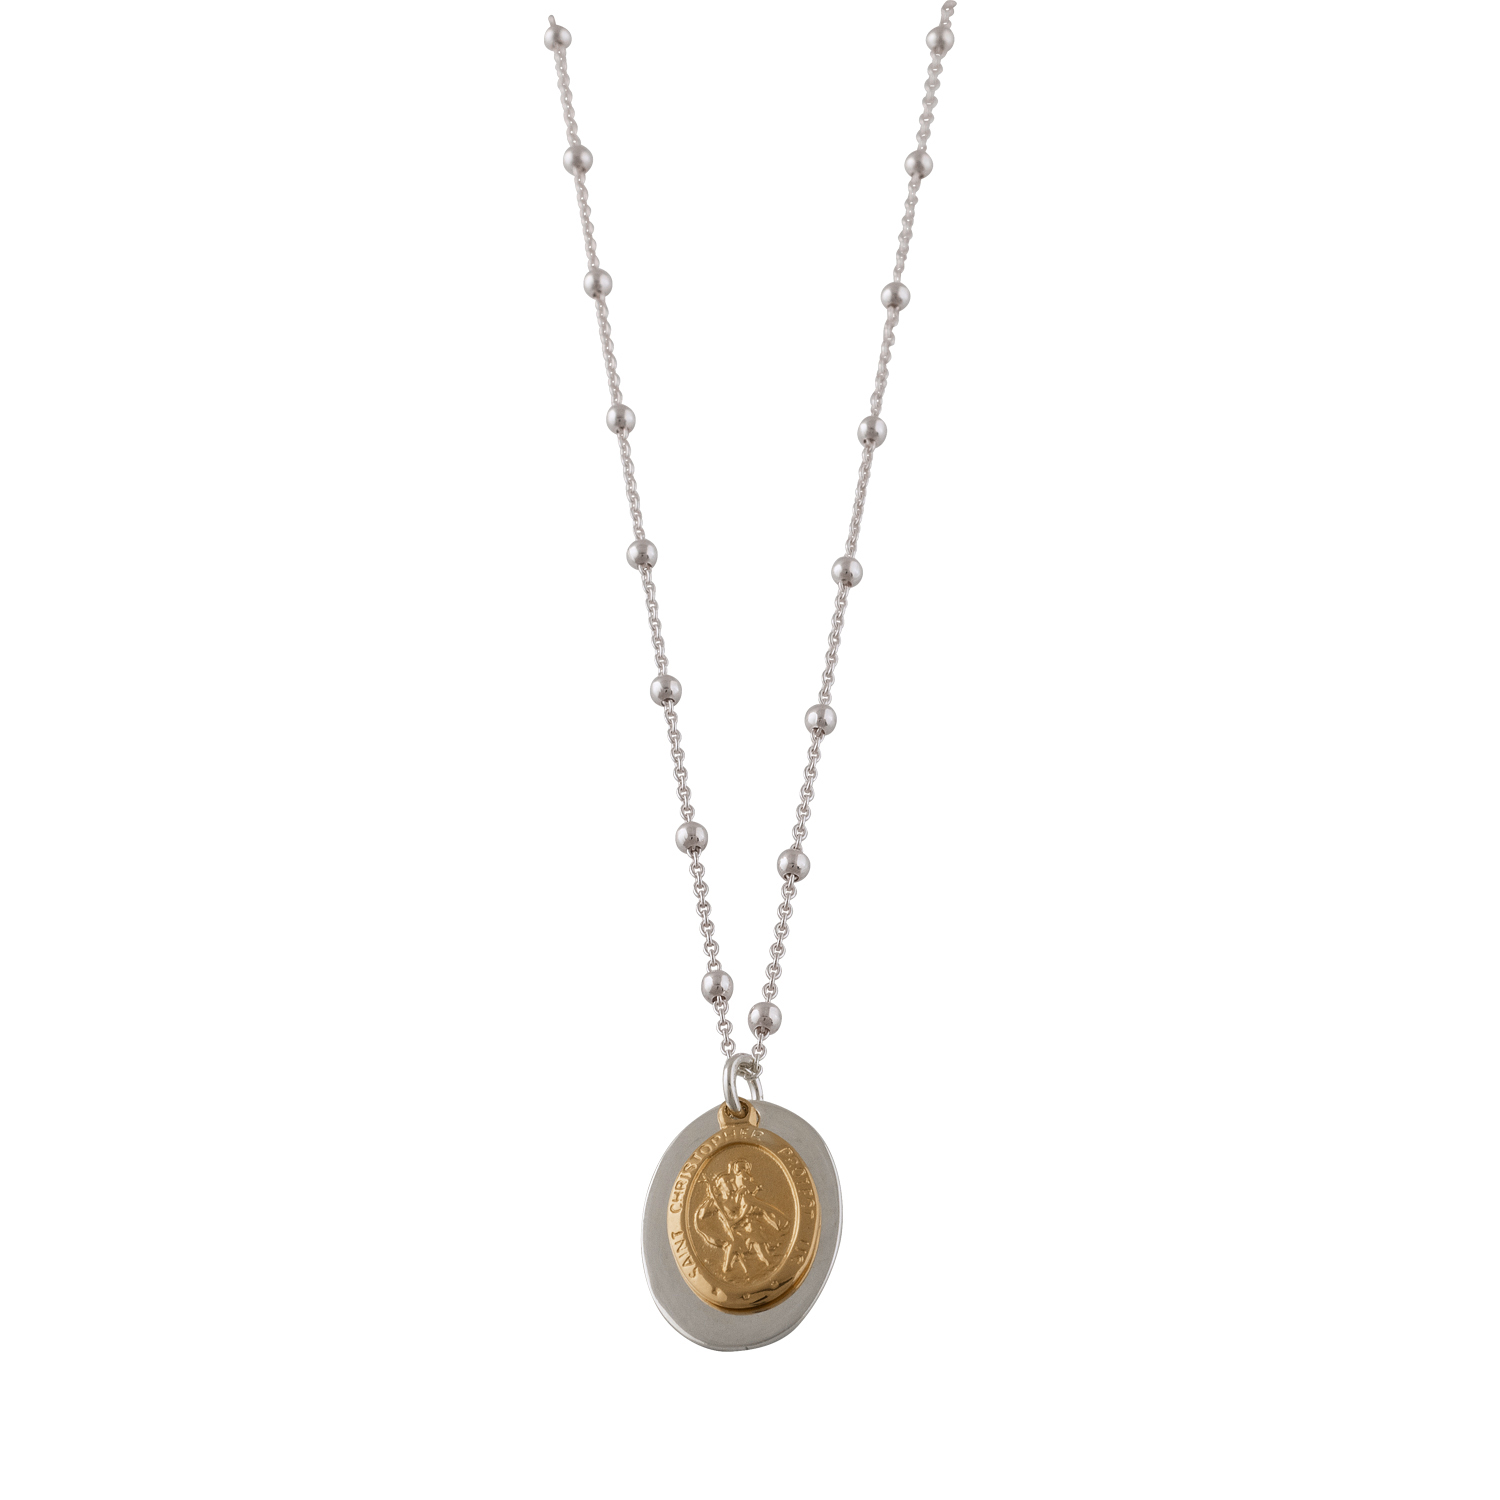 Rosario necklace with St Christopher - Von Treskow